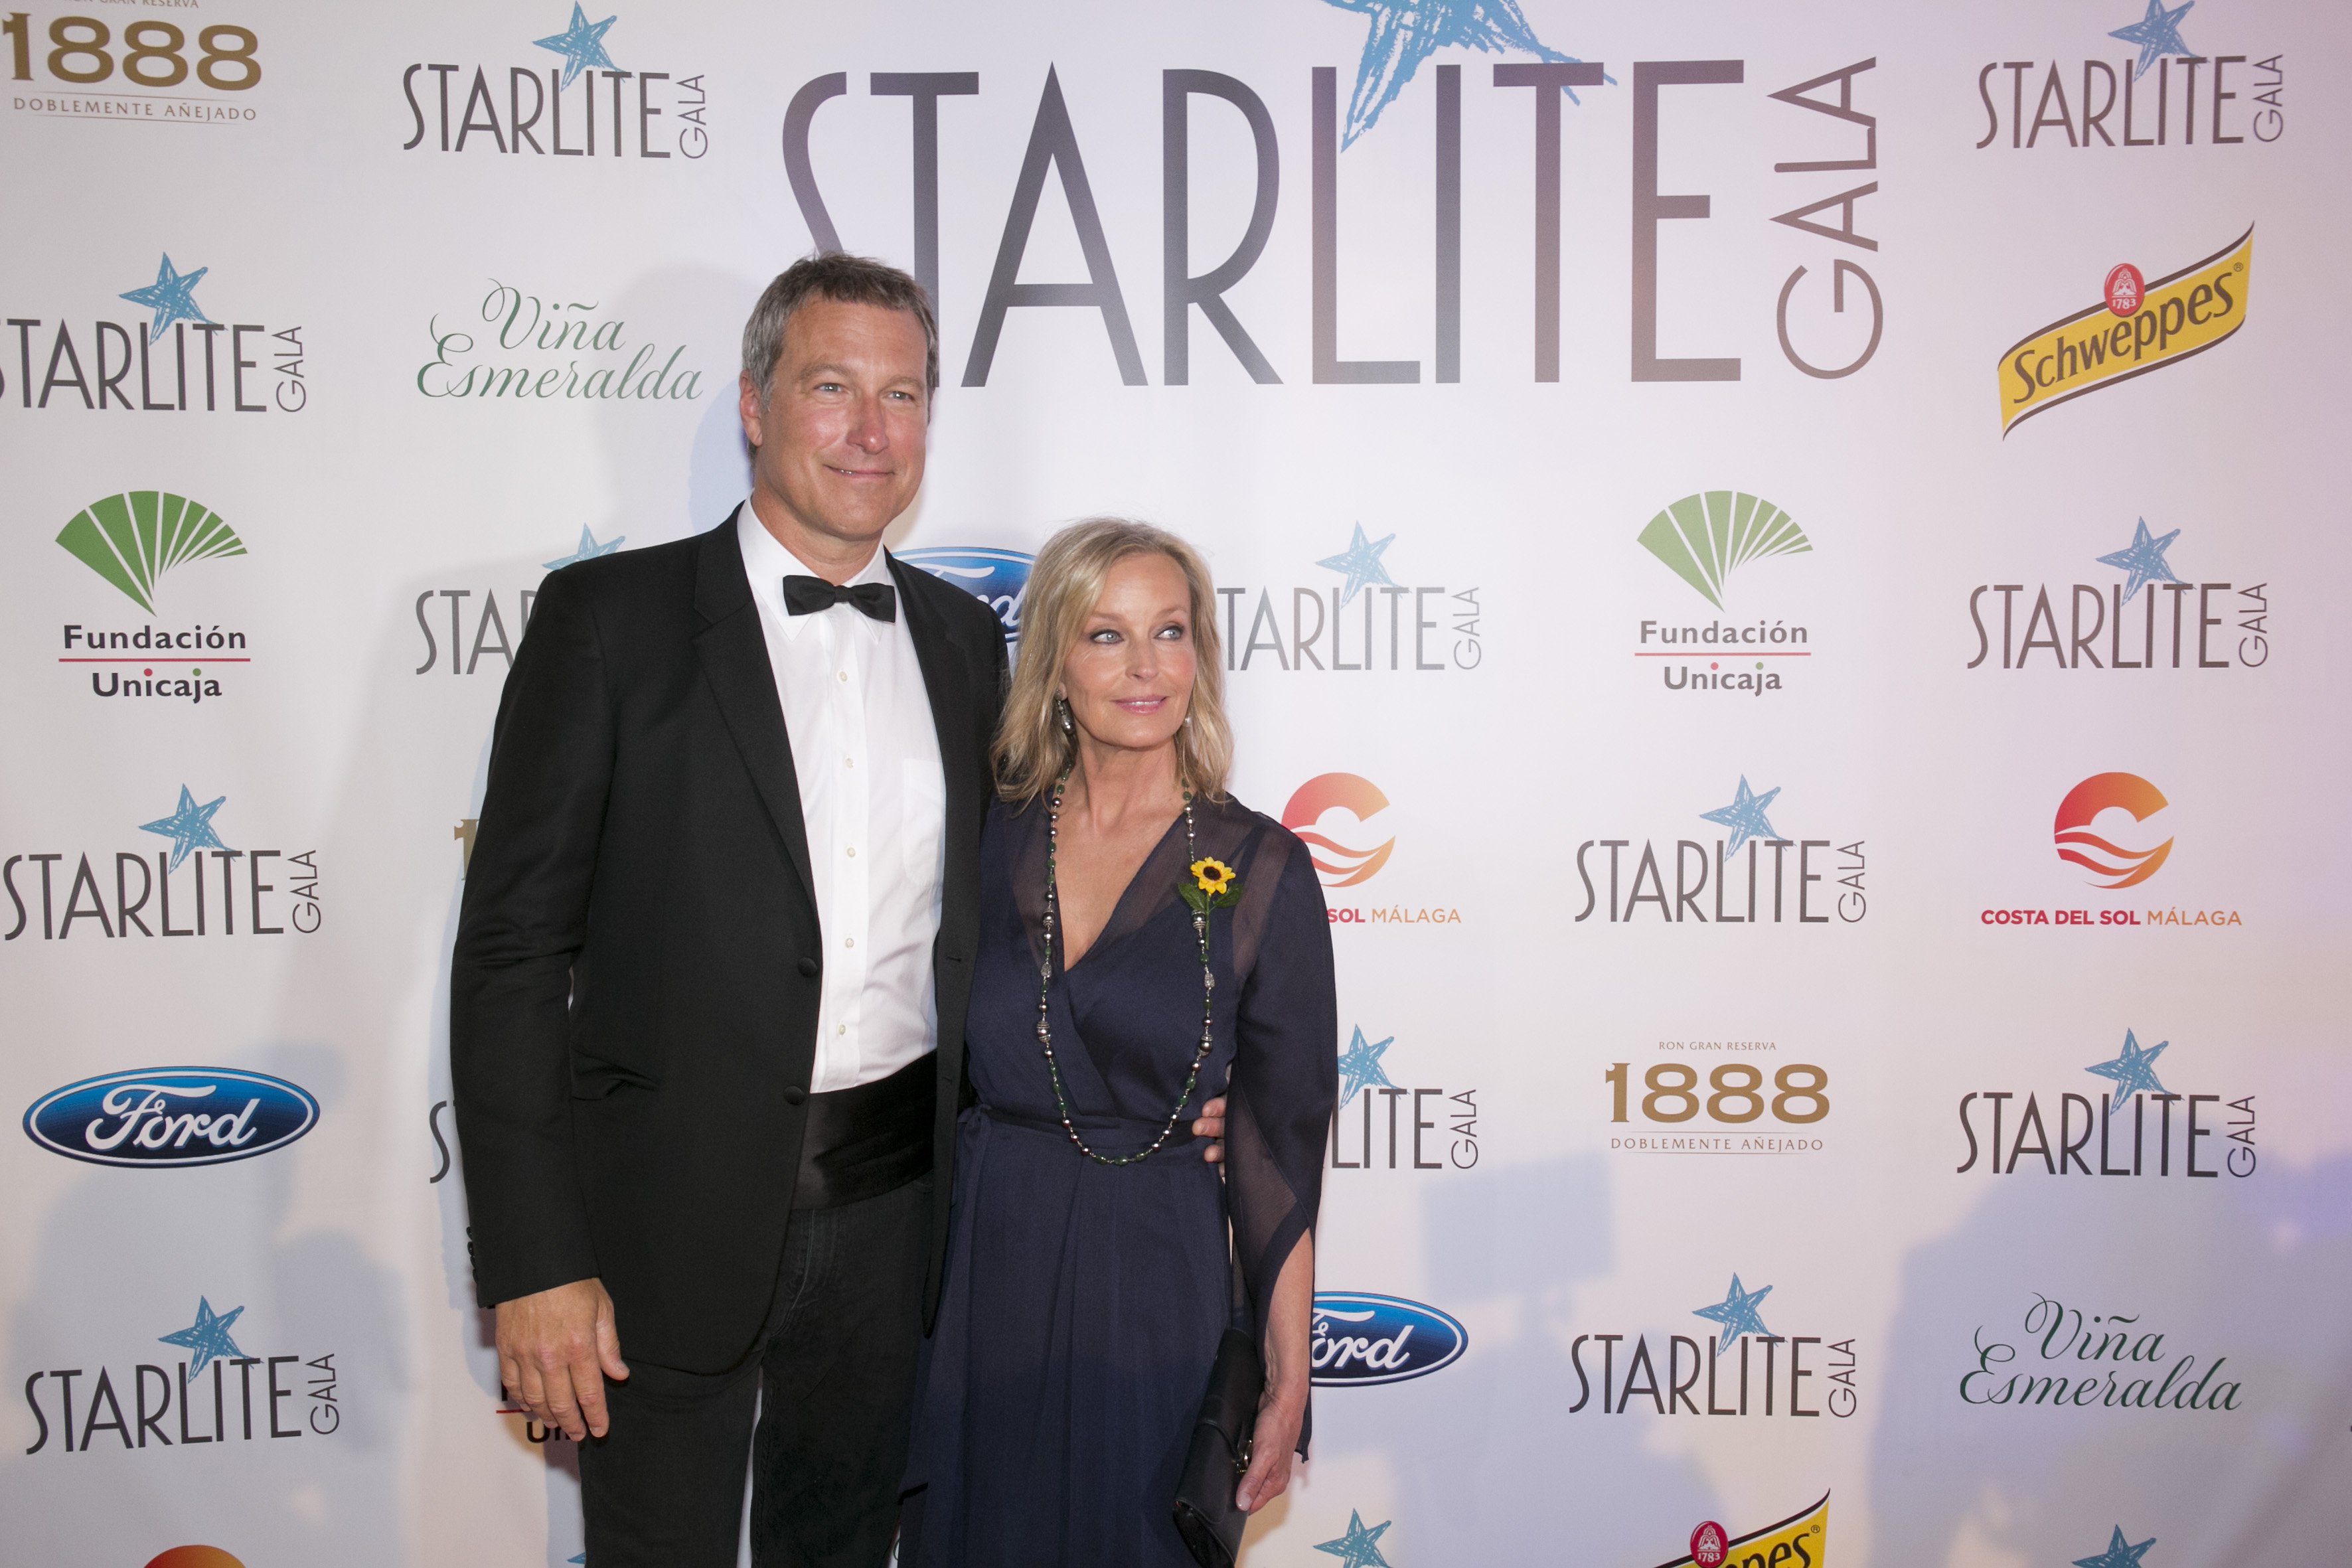 John Corbett and Bo Derek attend the Starlite Gala on August 11, 2018 in Marbella, Spain | Source: Getty Images